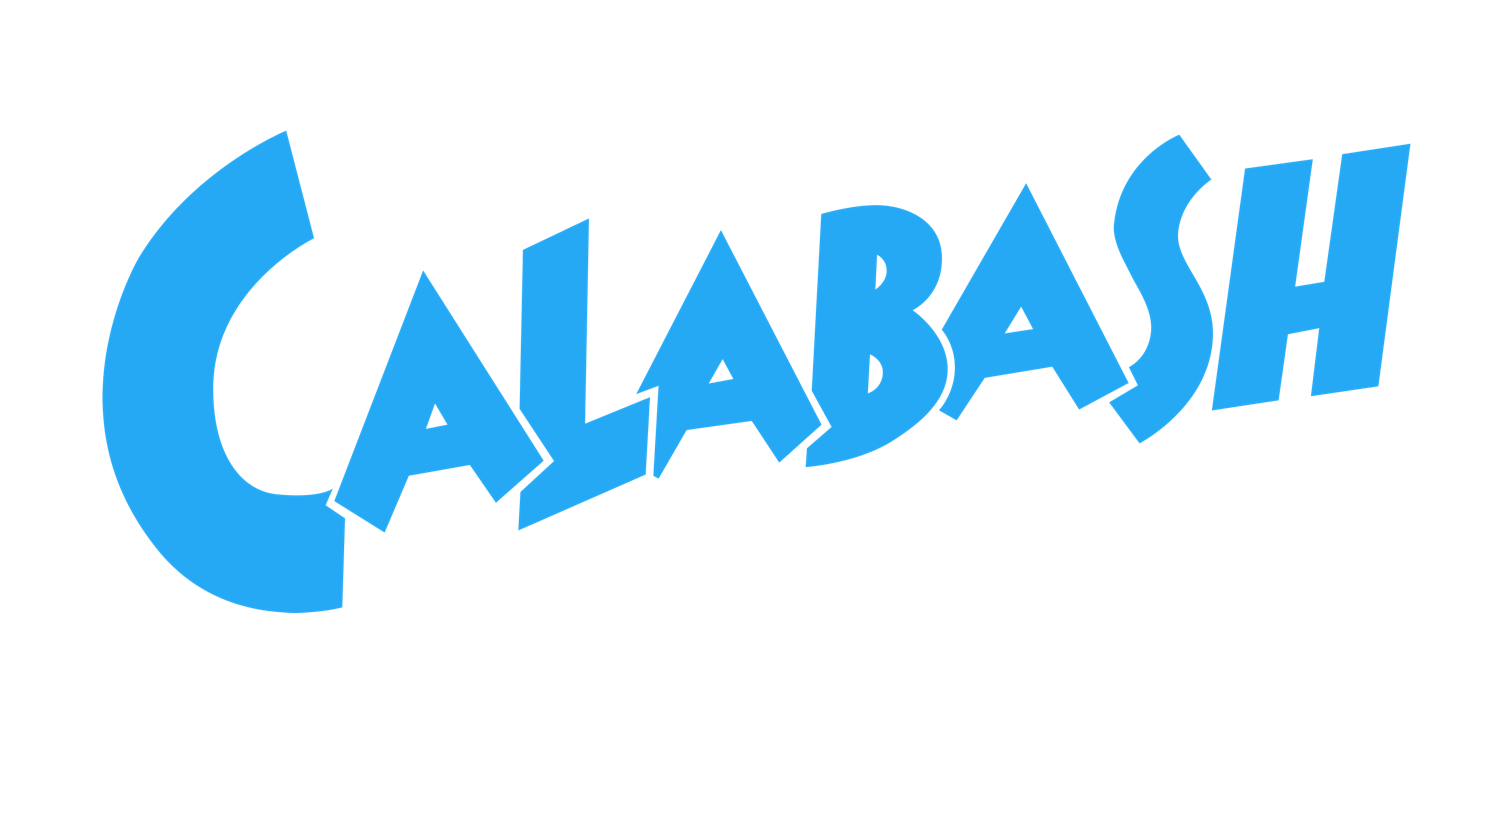 Calabash 2017 4